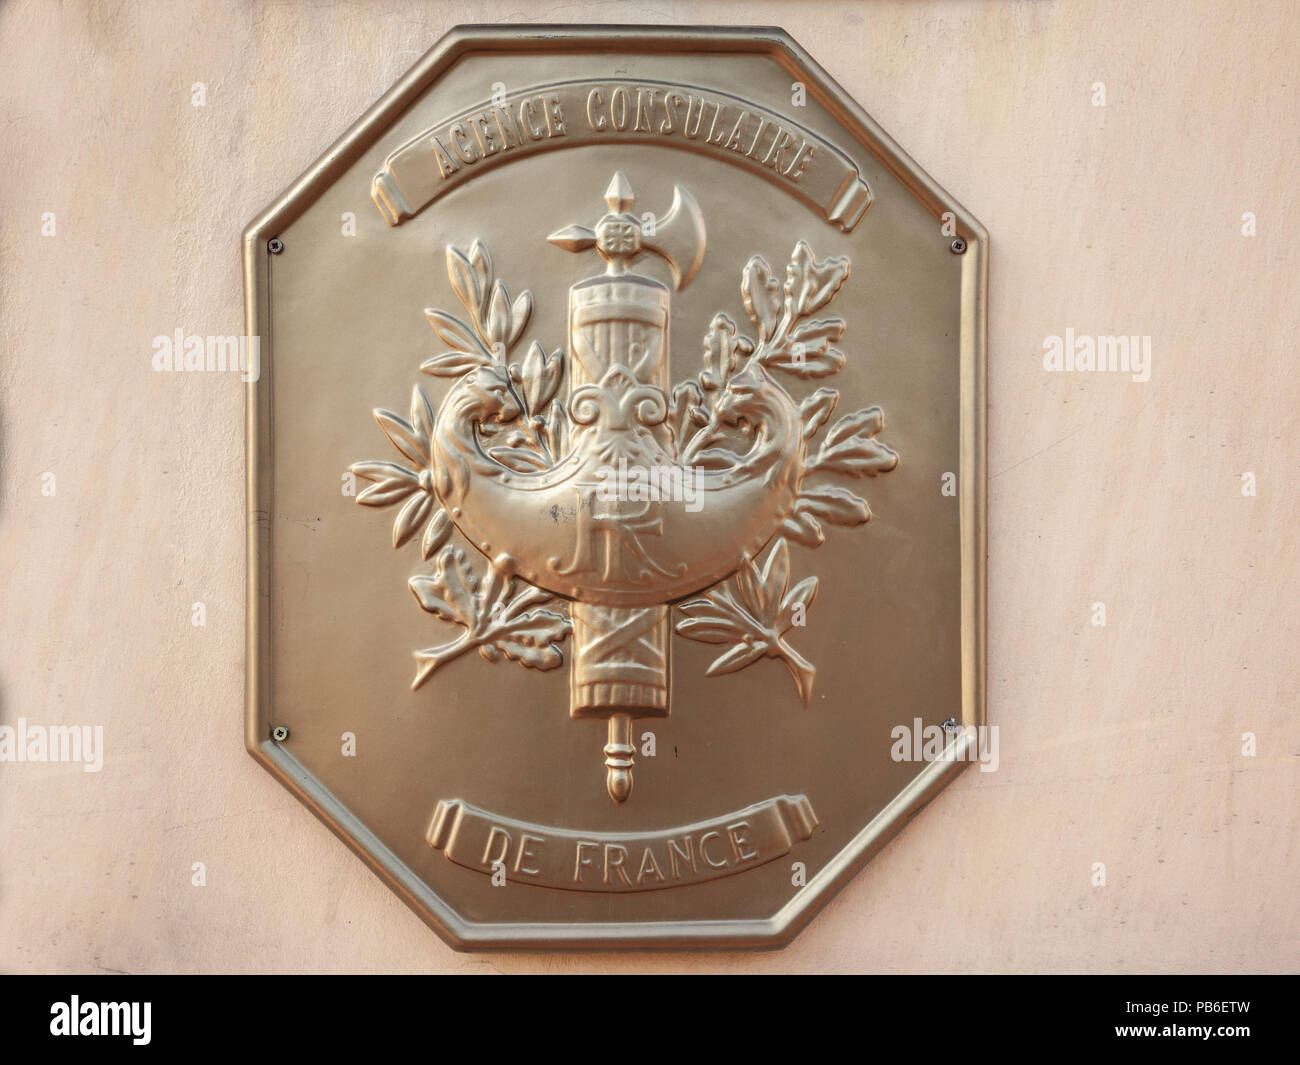 SZEGED, UNGARN - Juli 2, 2018: Offizielle Plakette der lokalen französischen Konsulat (Consulat de la Republique Francaise) mit dem Siegel und Wappen Stockfoto